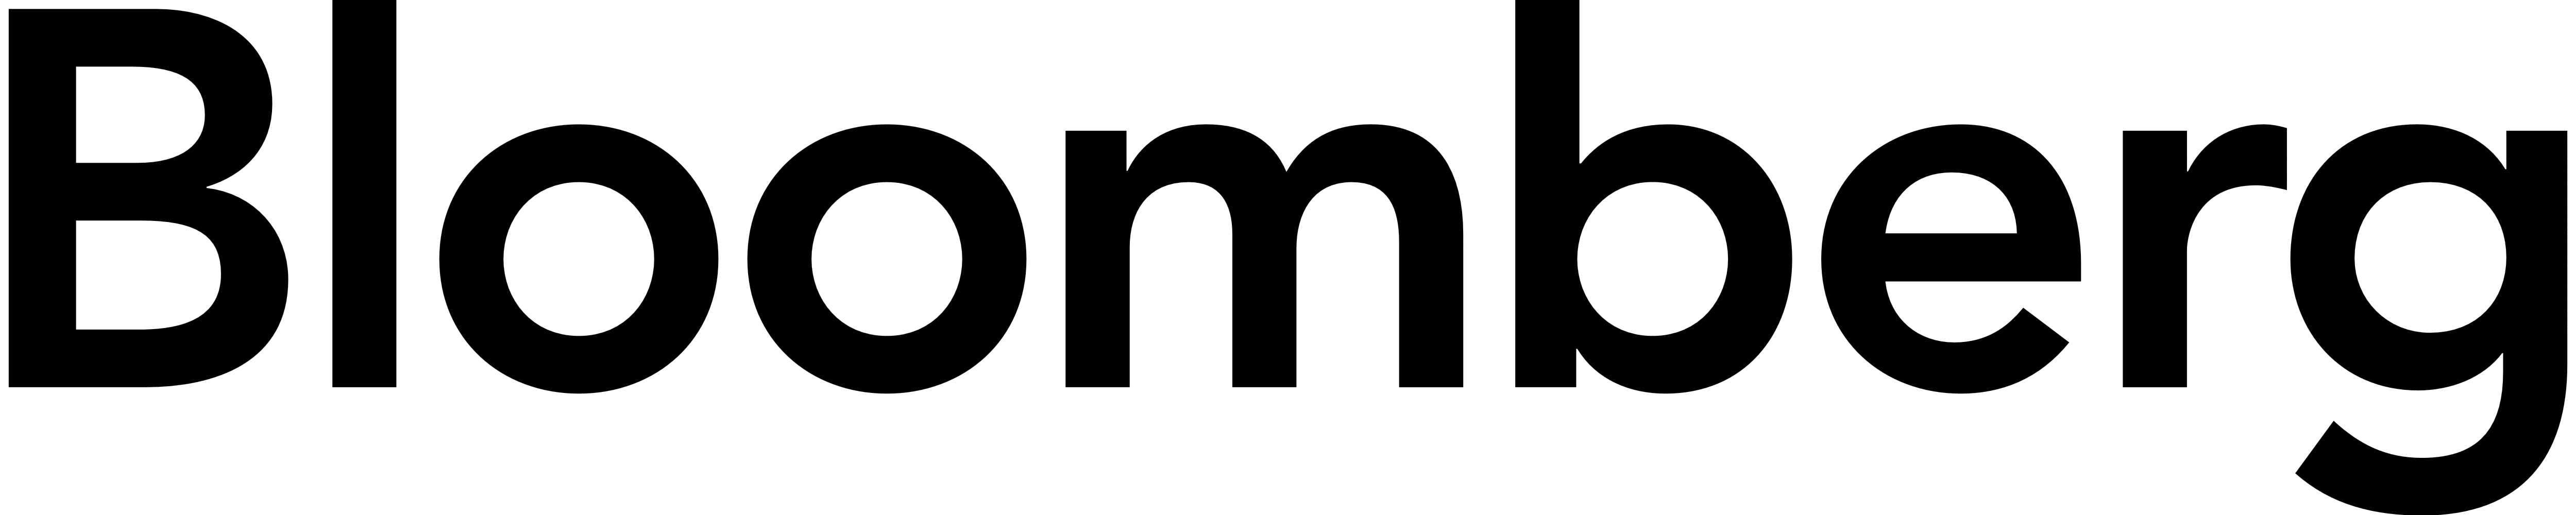 Bloomberg logo - Portal Integration